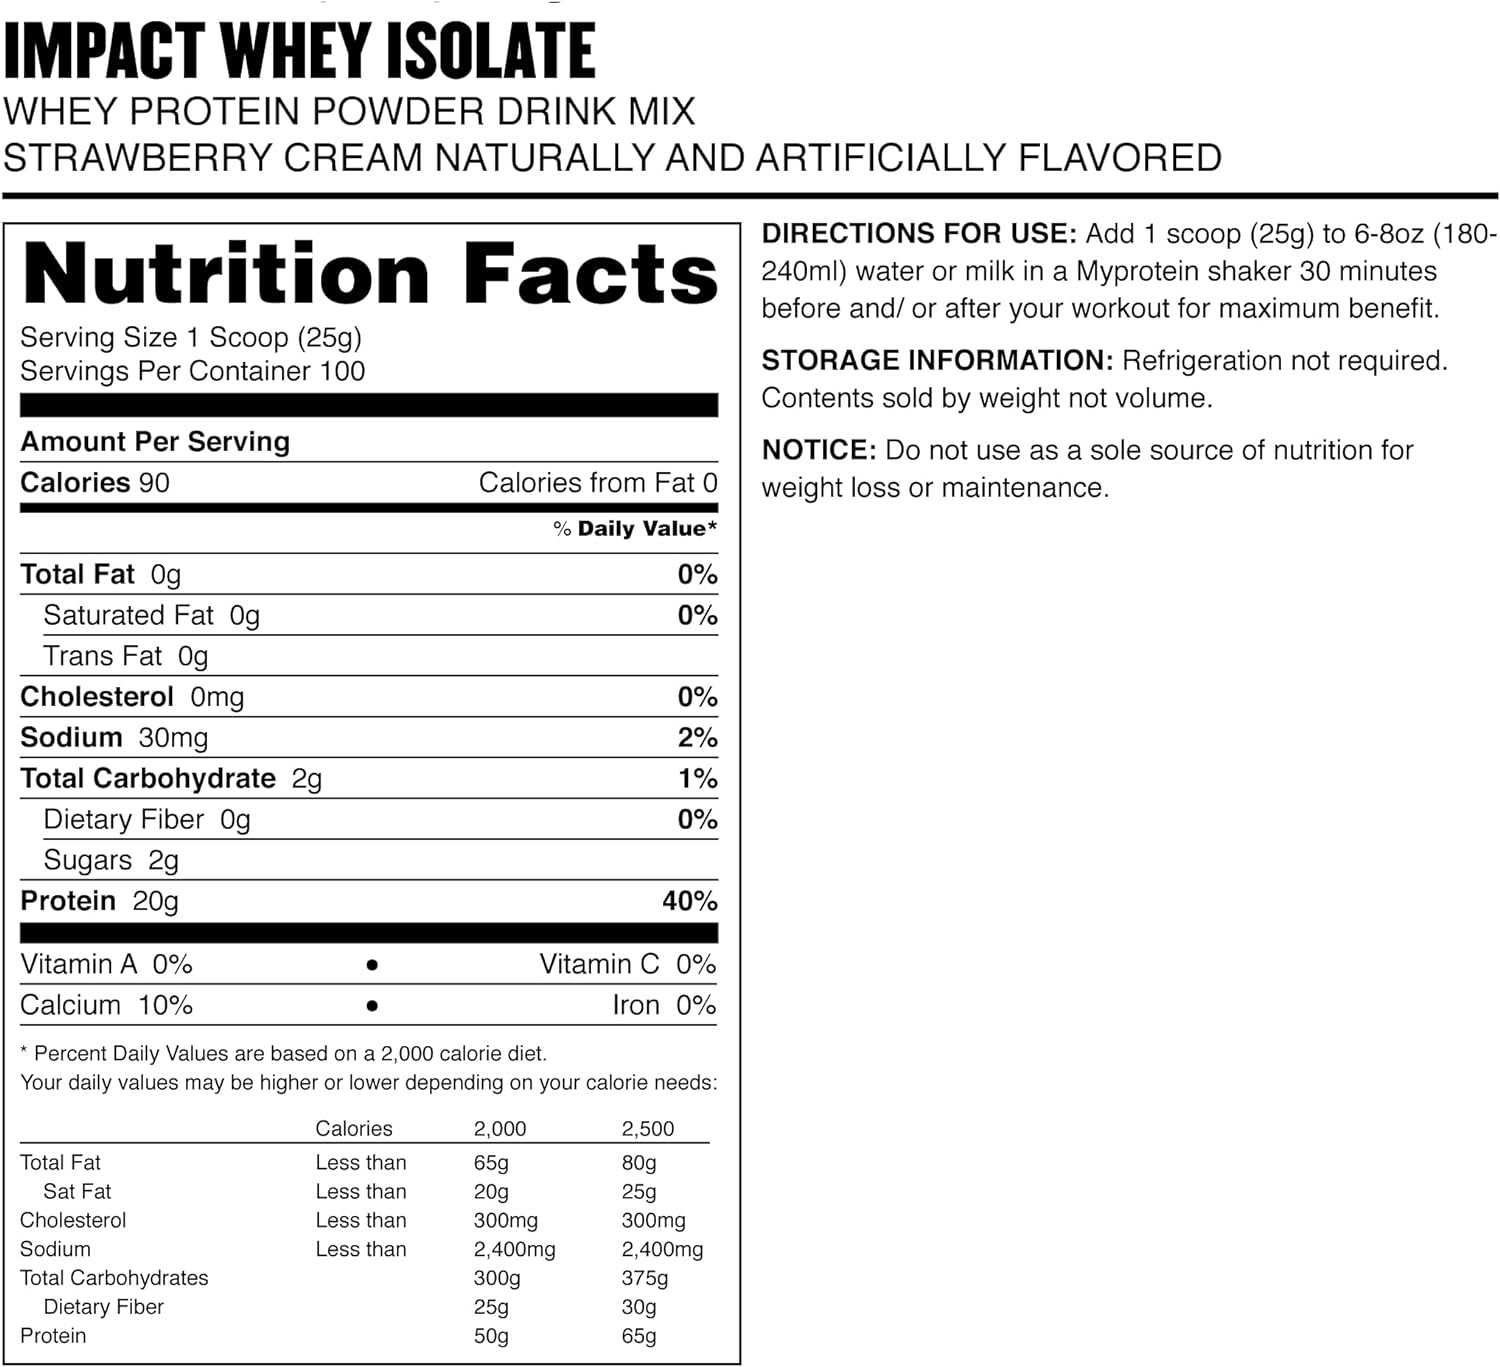 Myprotein Impact Whey Isolate Protein Powder (Strawberry, 5.5 Pound (Pack of 1))